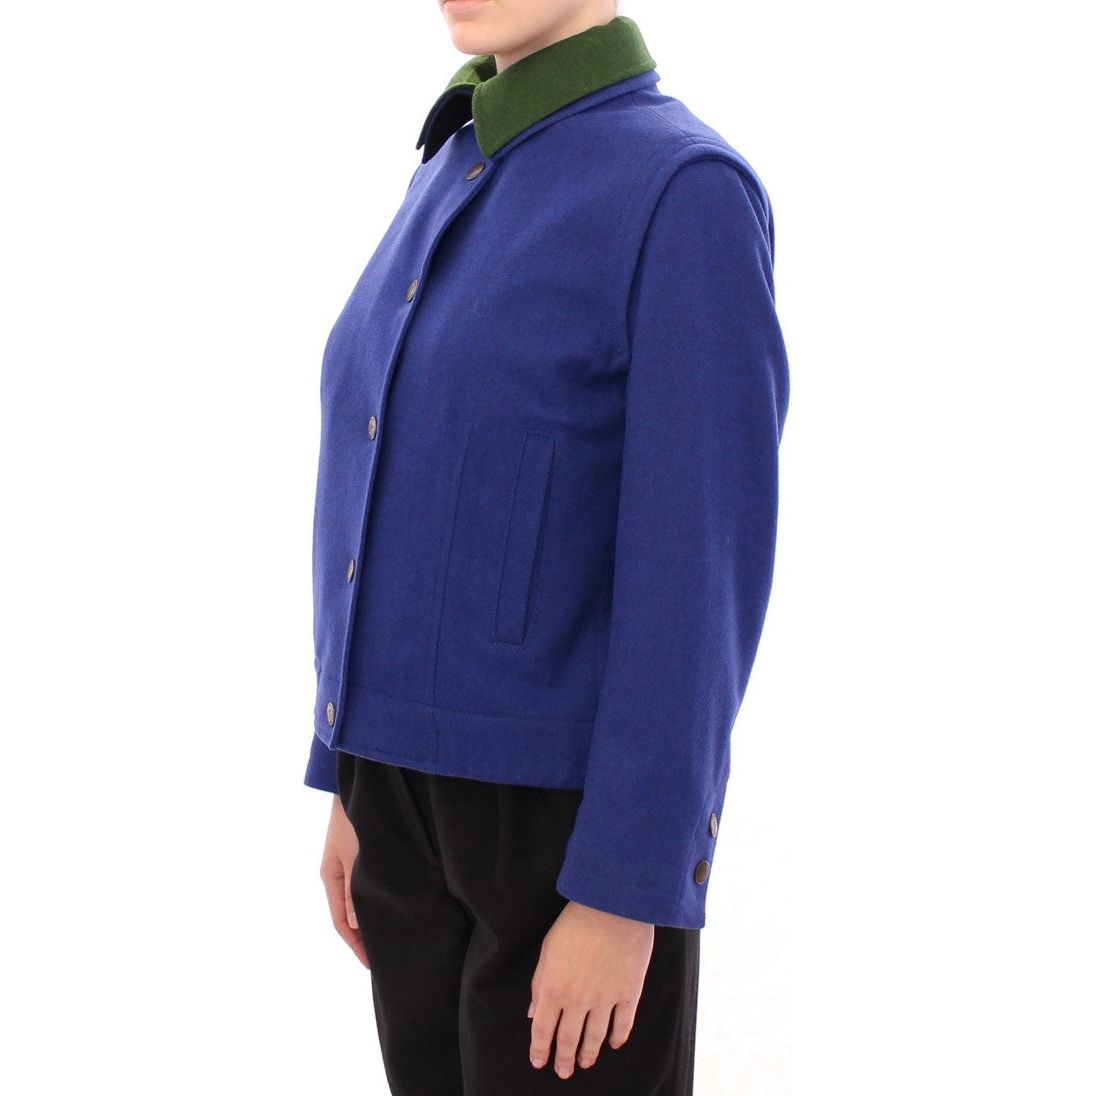 Andrea Incontri Elegant Blue Wool Jacket with Removable Collar Coats & Jackets habsburg-blue-green-wool-jacket-coat 148686-habsburg-blue-green-wool-jacket-coat-1.jpg